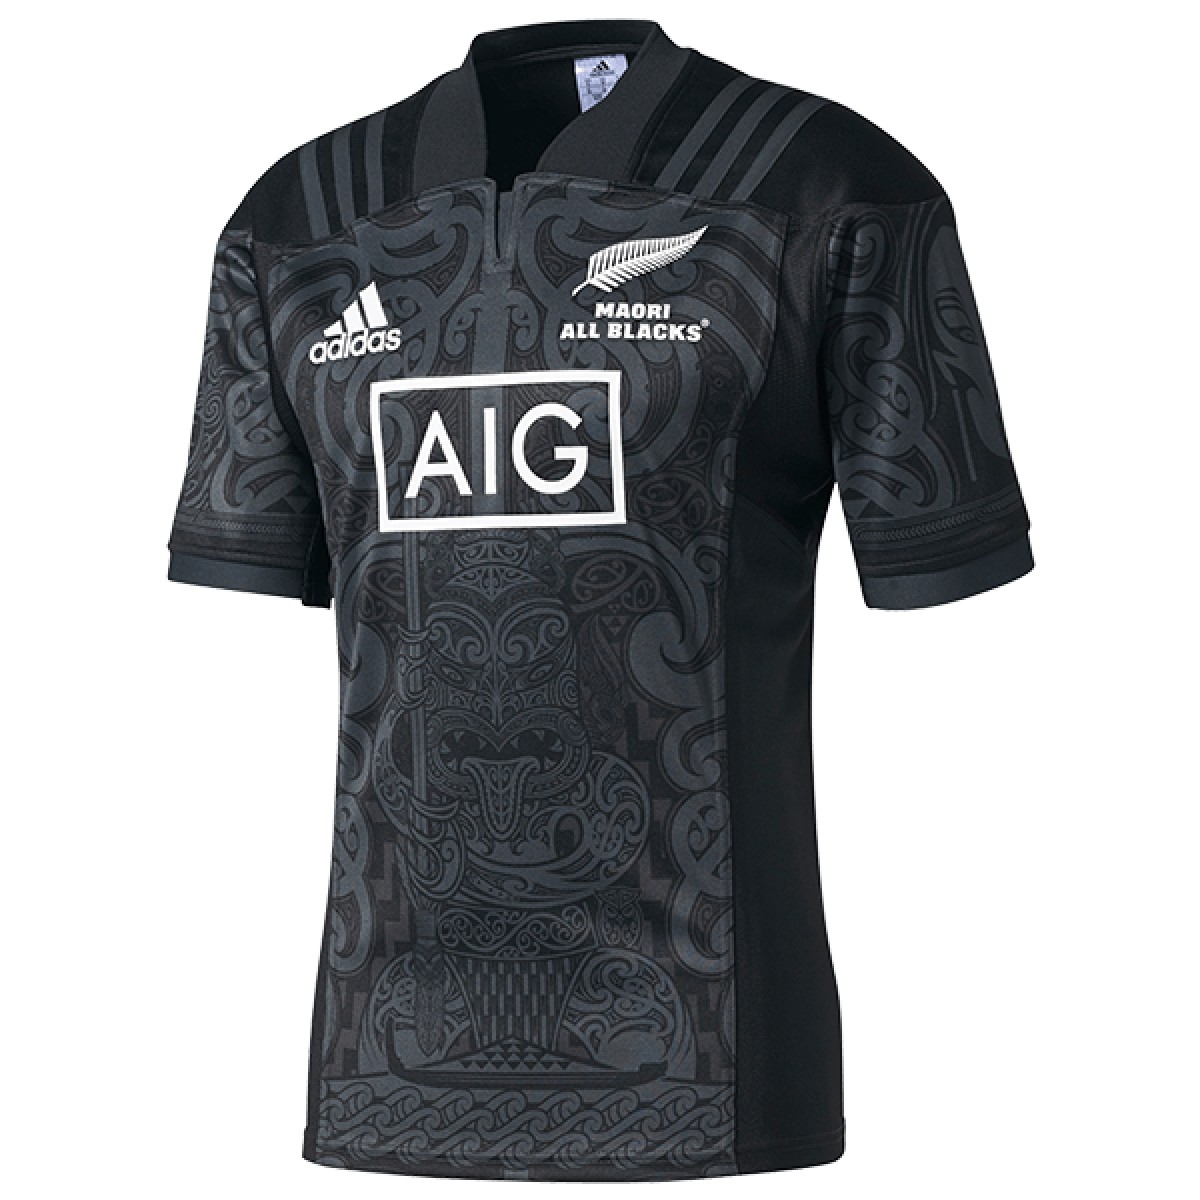 BNWT New Zealand MAORI All Blacks rugby jersey 2018/2019 Season 